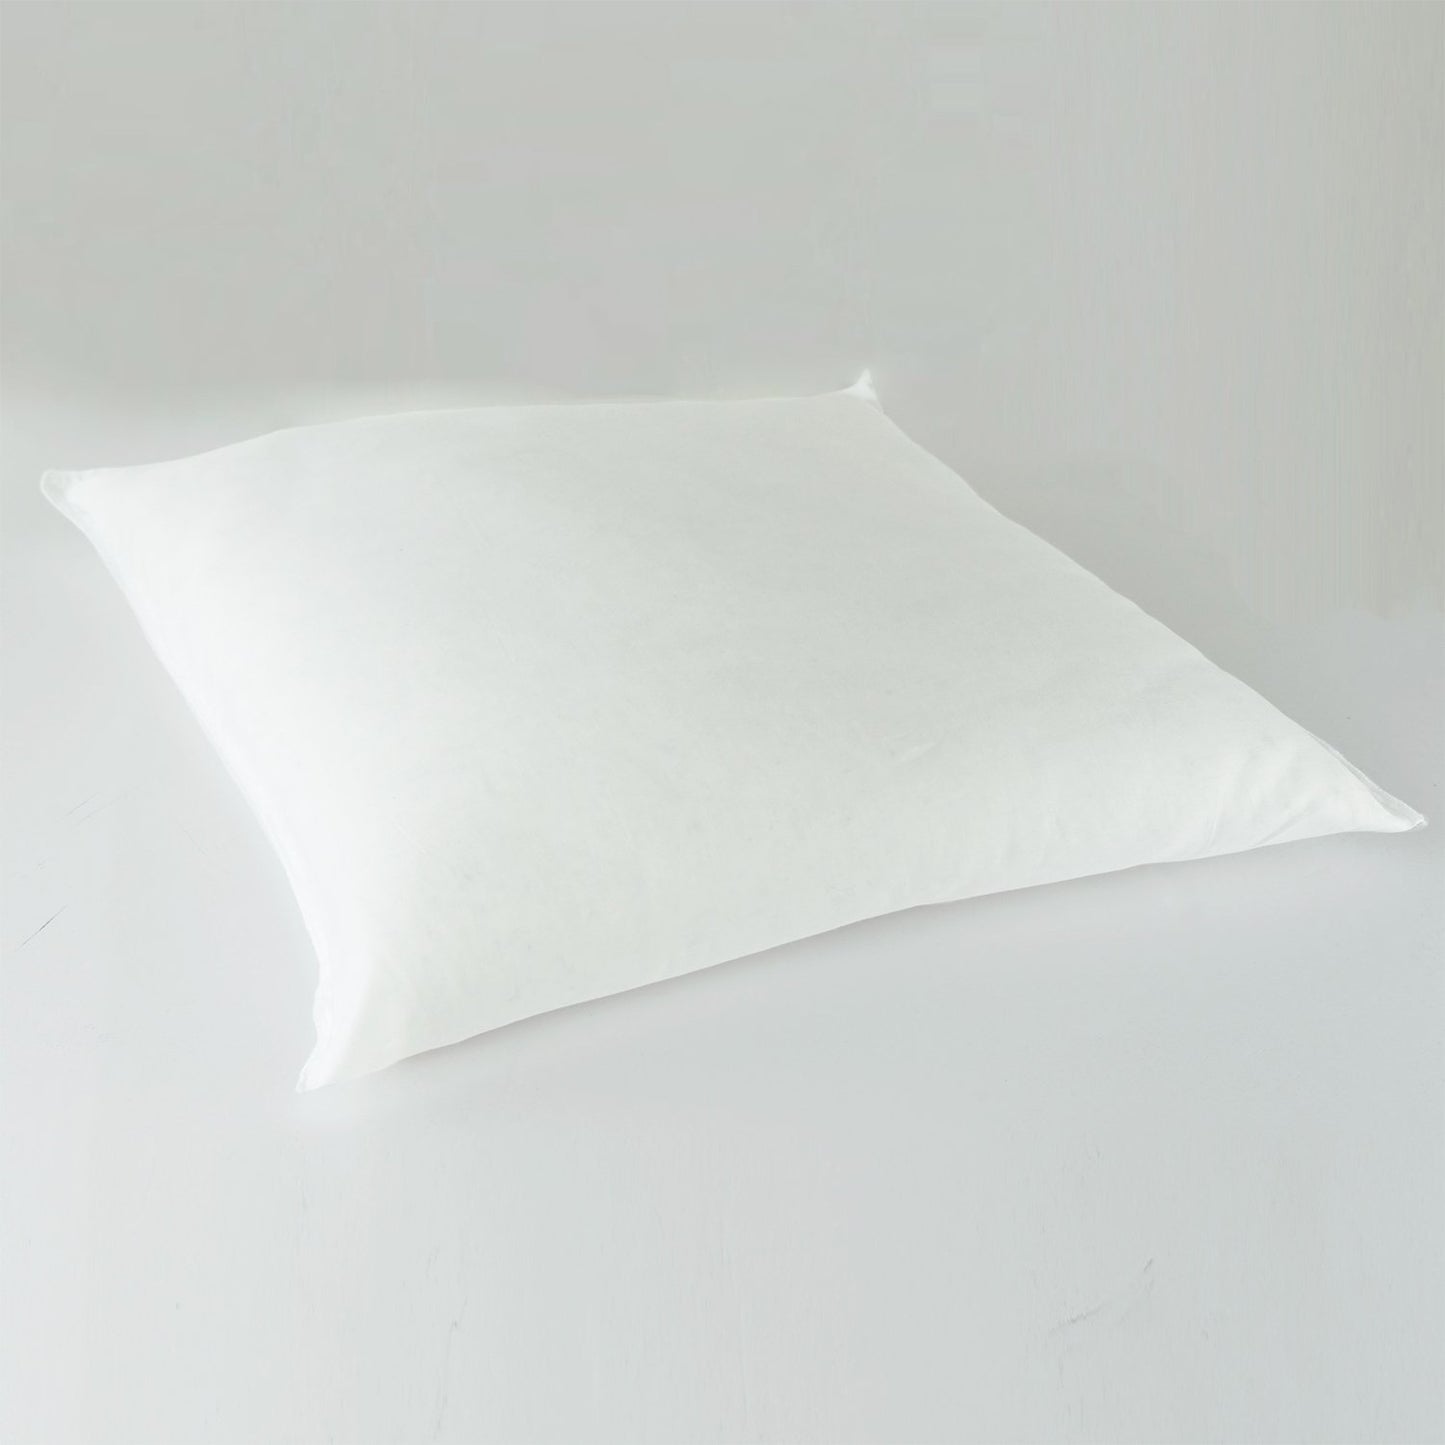 J-Life Seikai Ha Red Zabuton Floor Pillow_Pillows & Shams_Zabuton Floor Pillows_100% Cotton_Reversible_Handmade